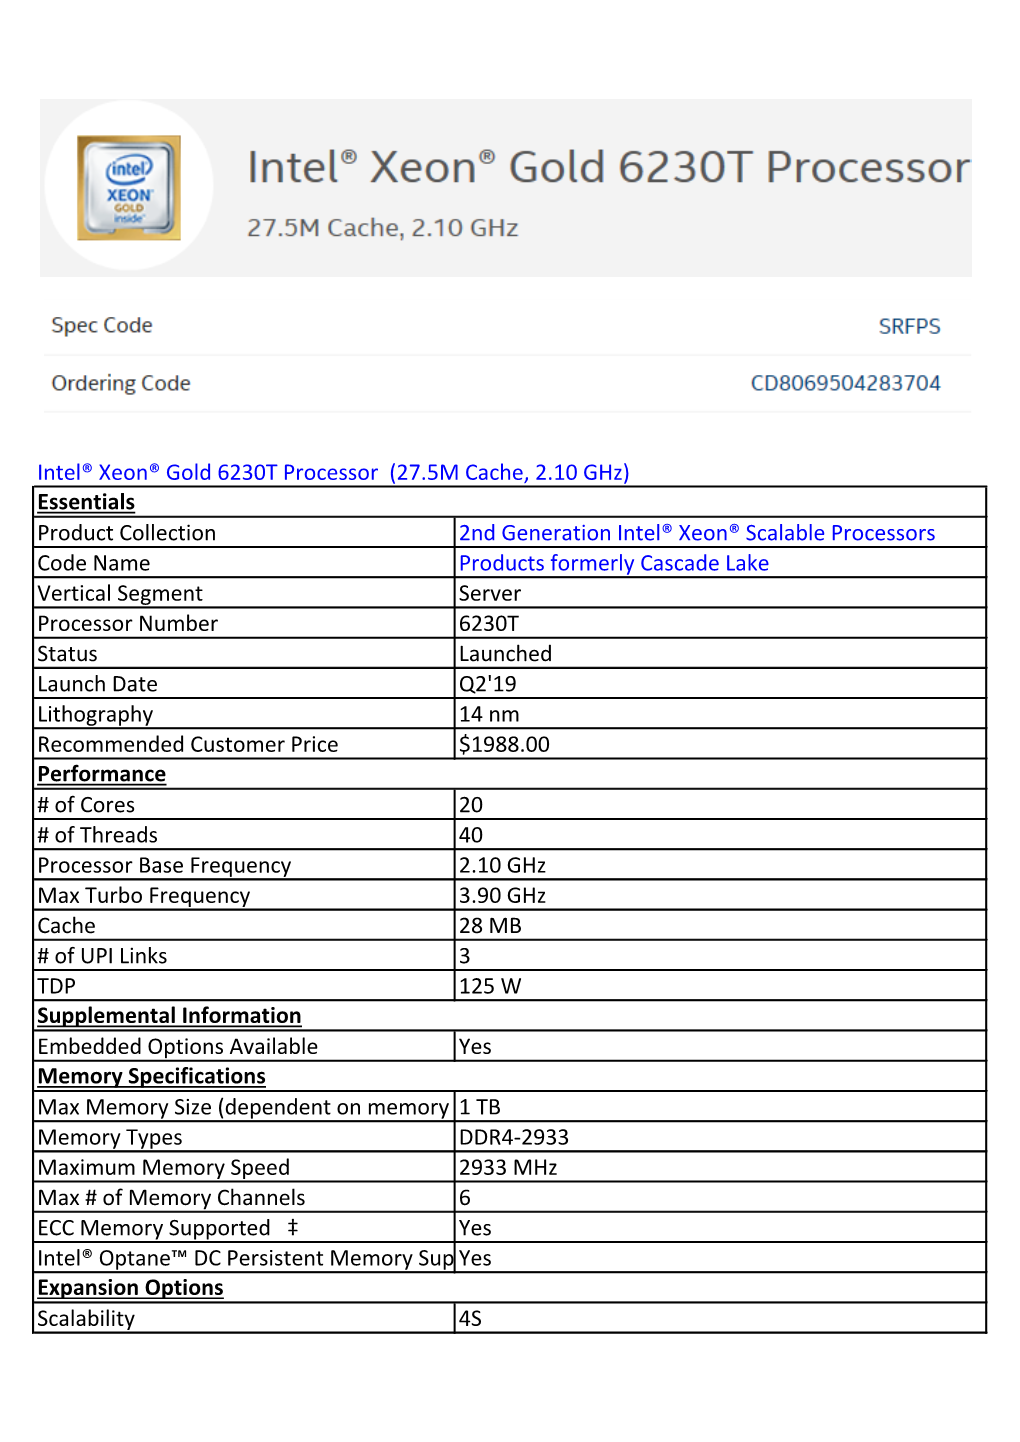 Intel® Xeon® Gold 6230T Processor (27.5M Cache, 2.10 Ghz)